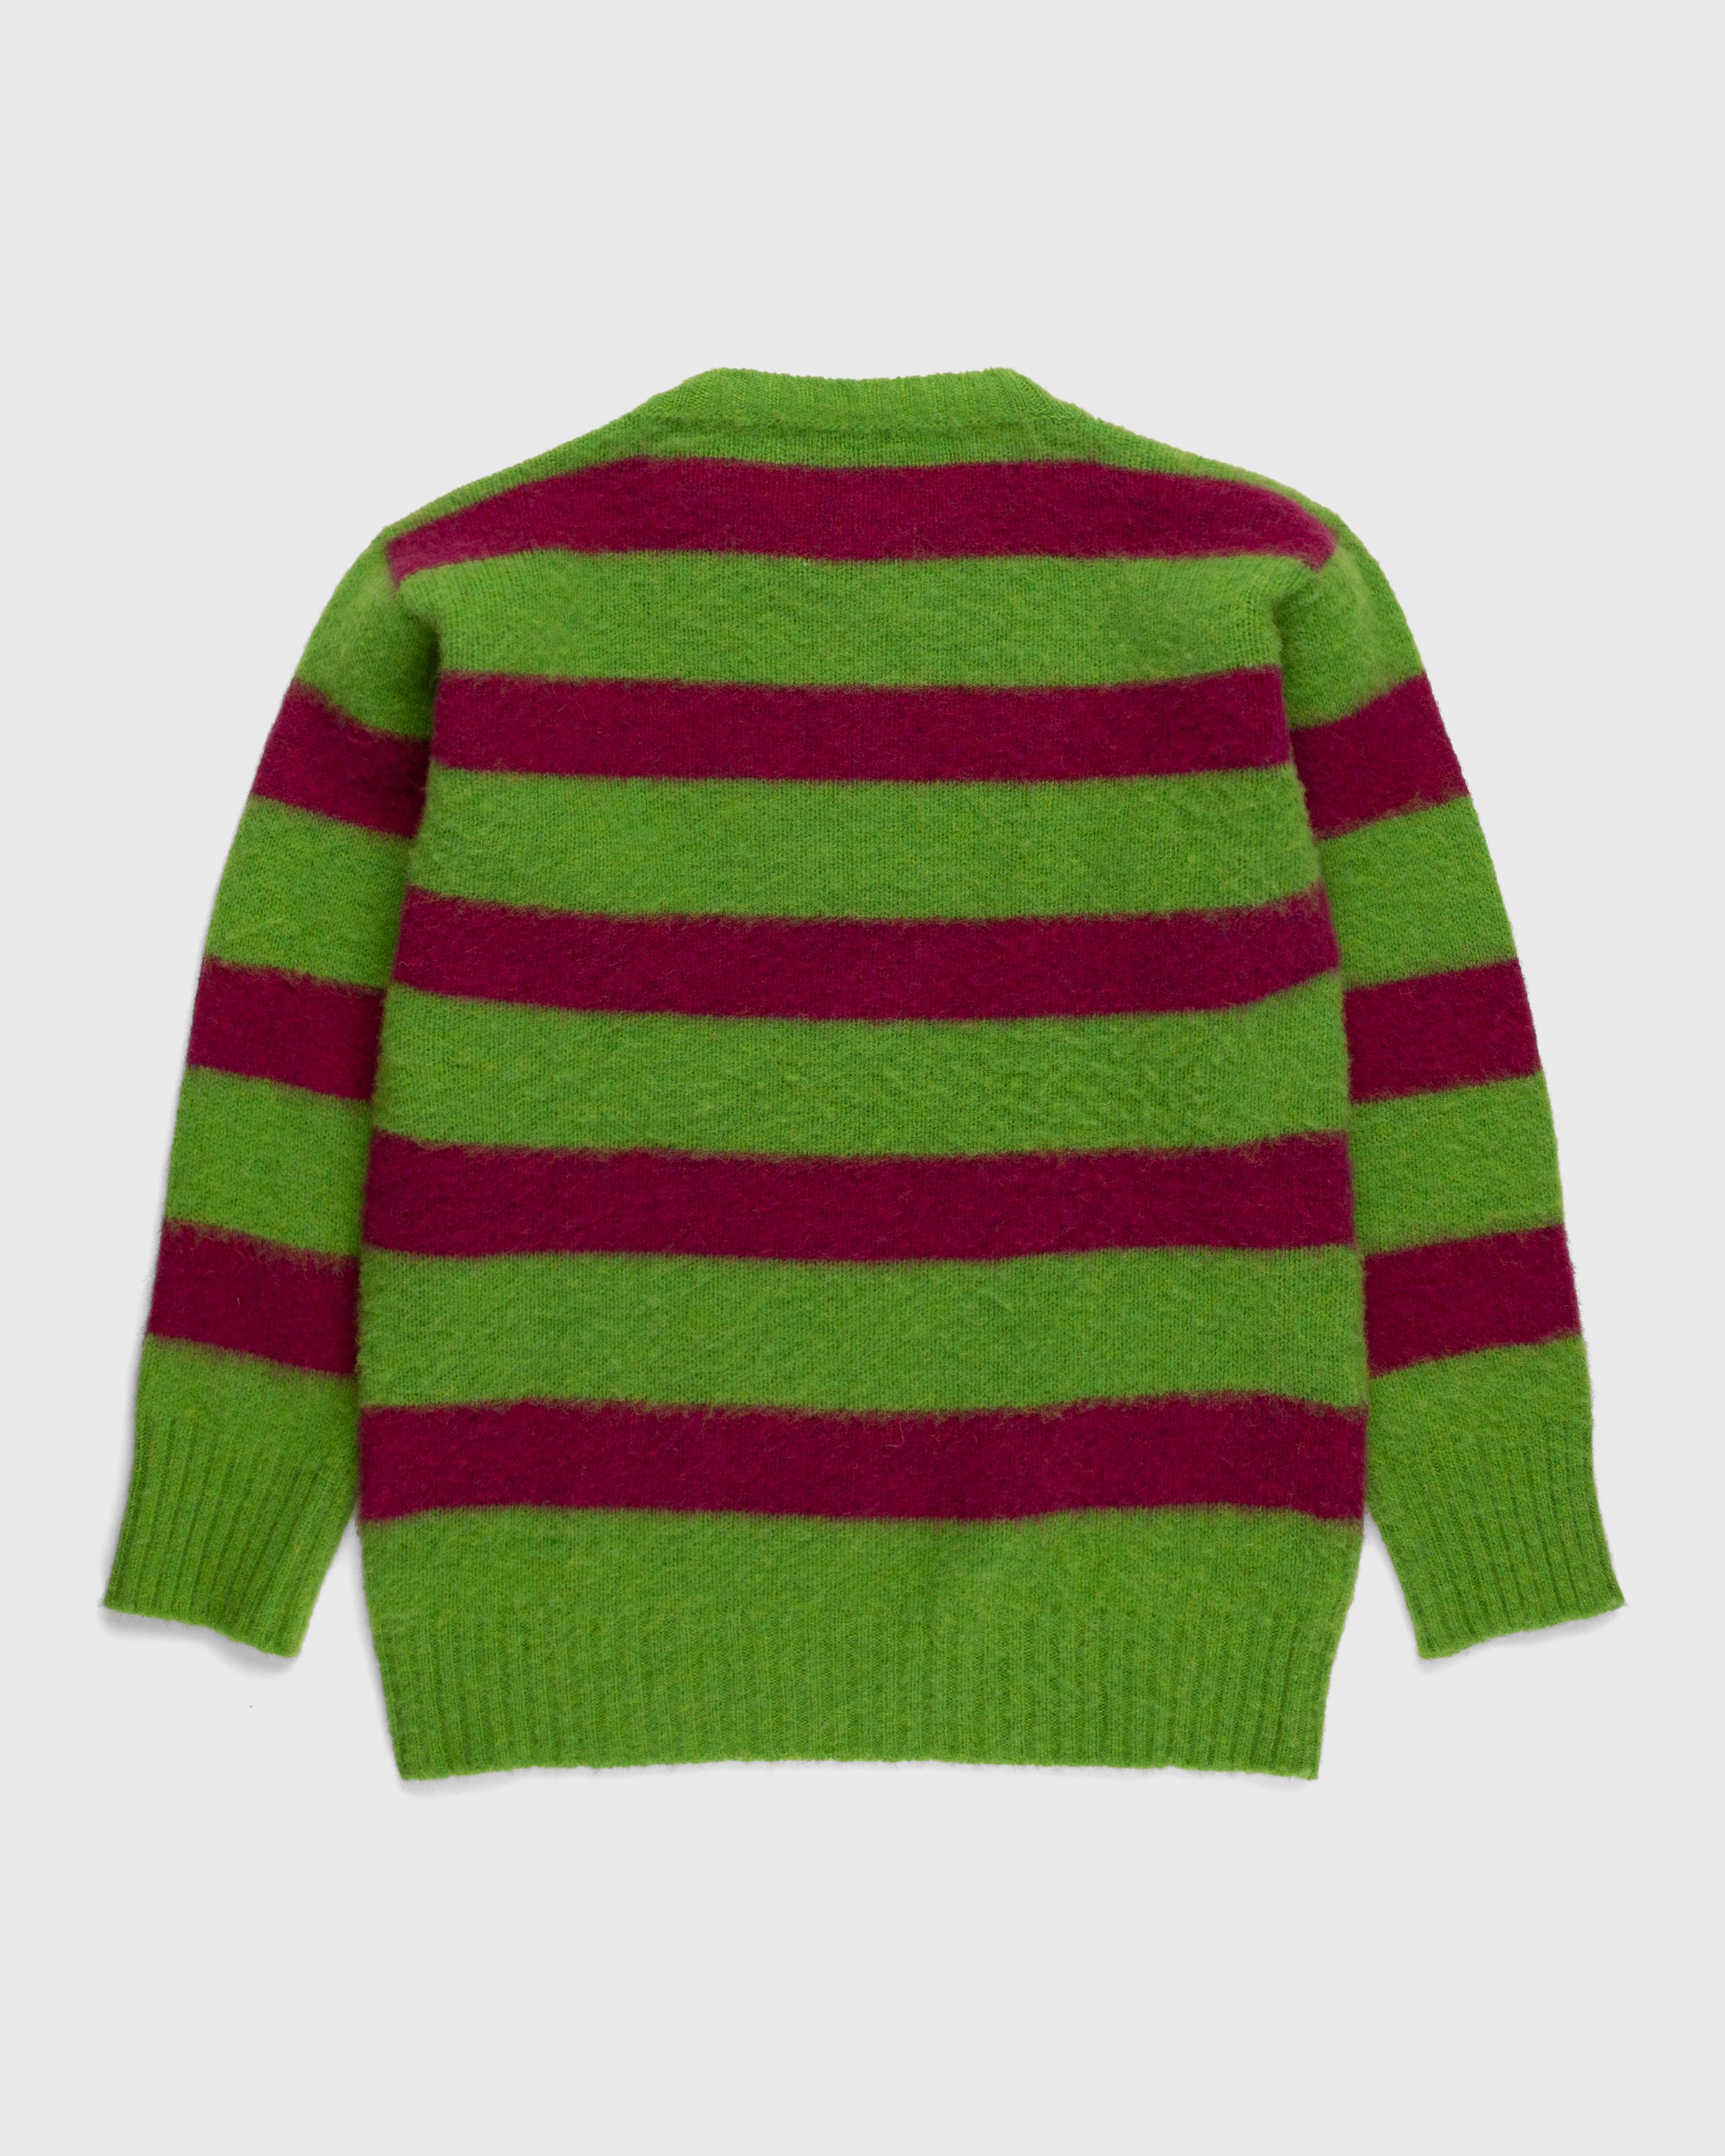 J. Press x Highsnobiety - Shaggy Dog Stripe Sweater Multi - Clothing - Multi - Image 2